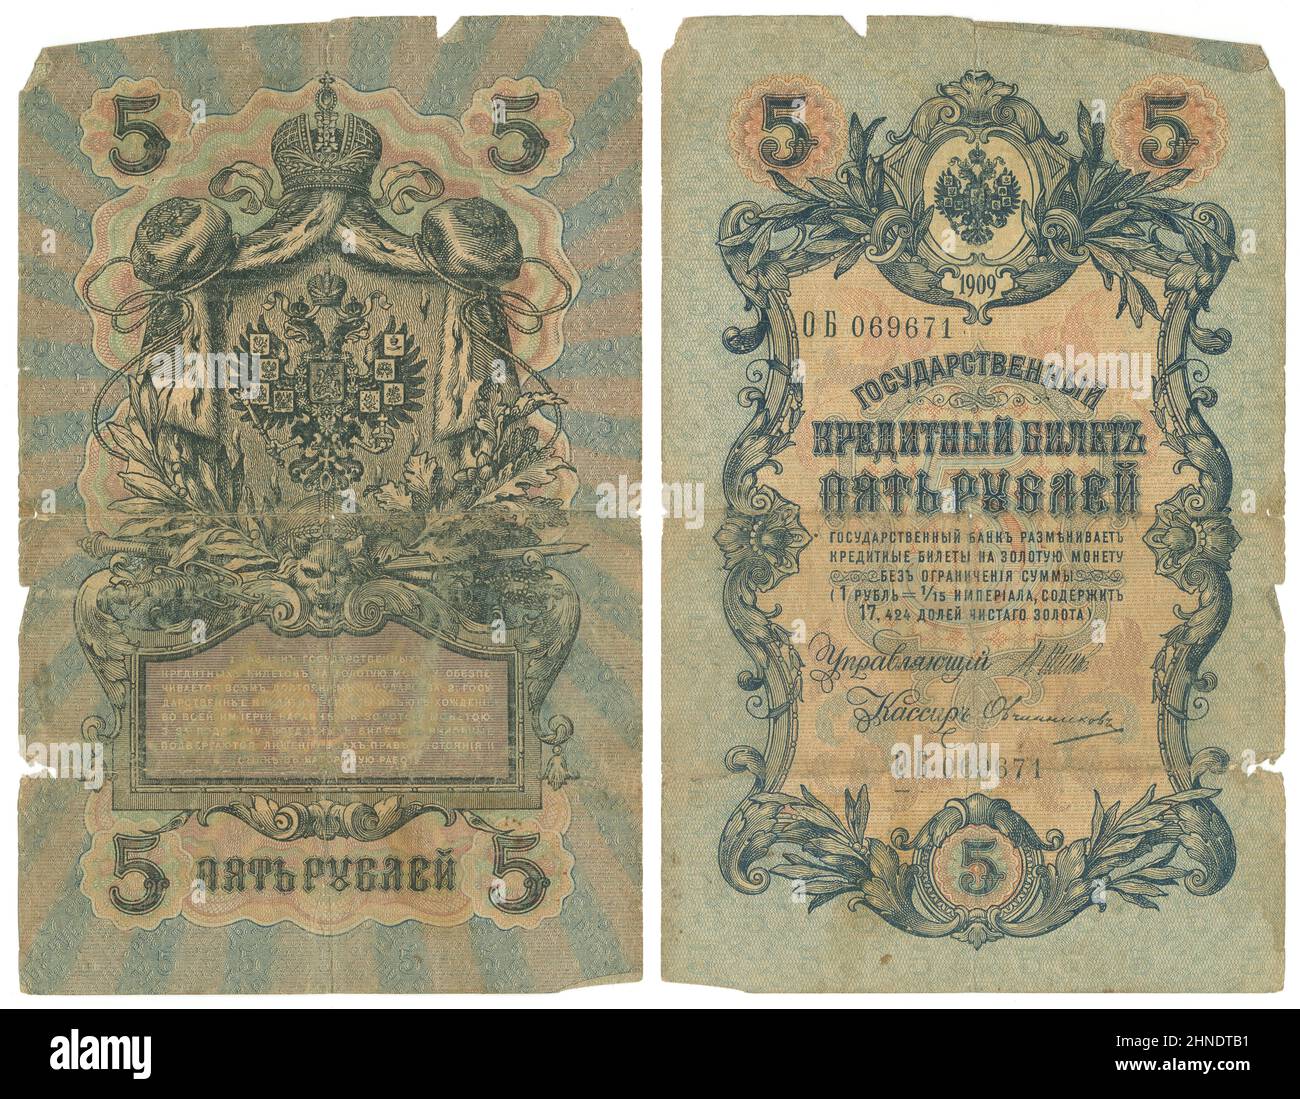 1909, Cinco rublos nota, Rusia, anverso y reverso. Tamaño real: 156mm x 99mm. Foto de stock